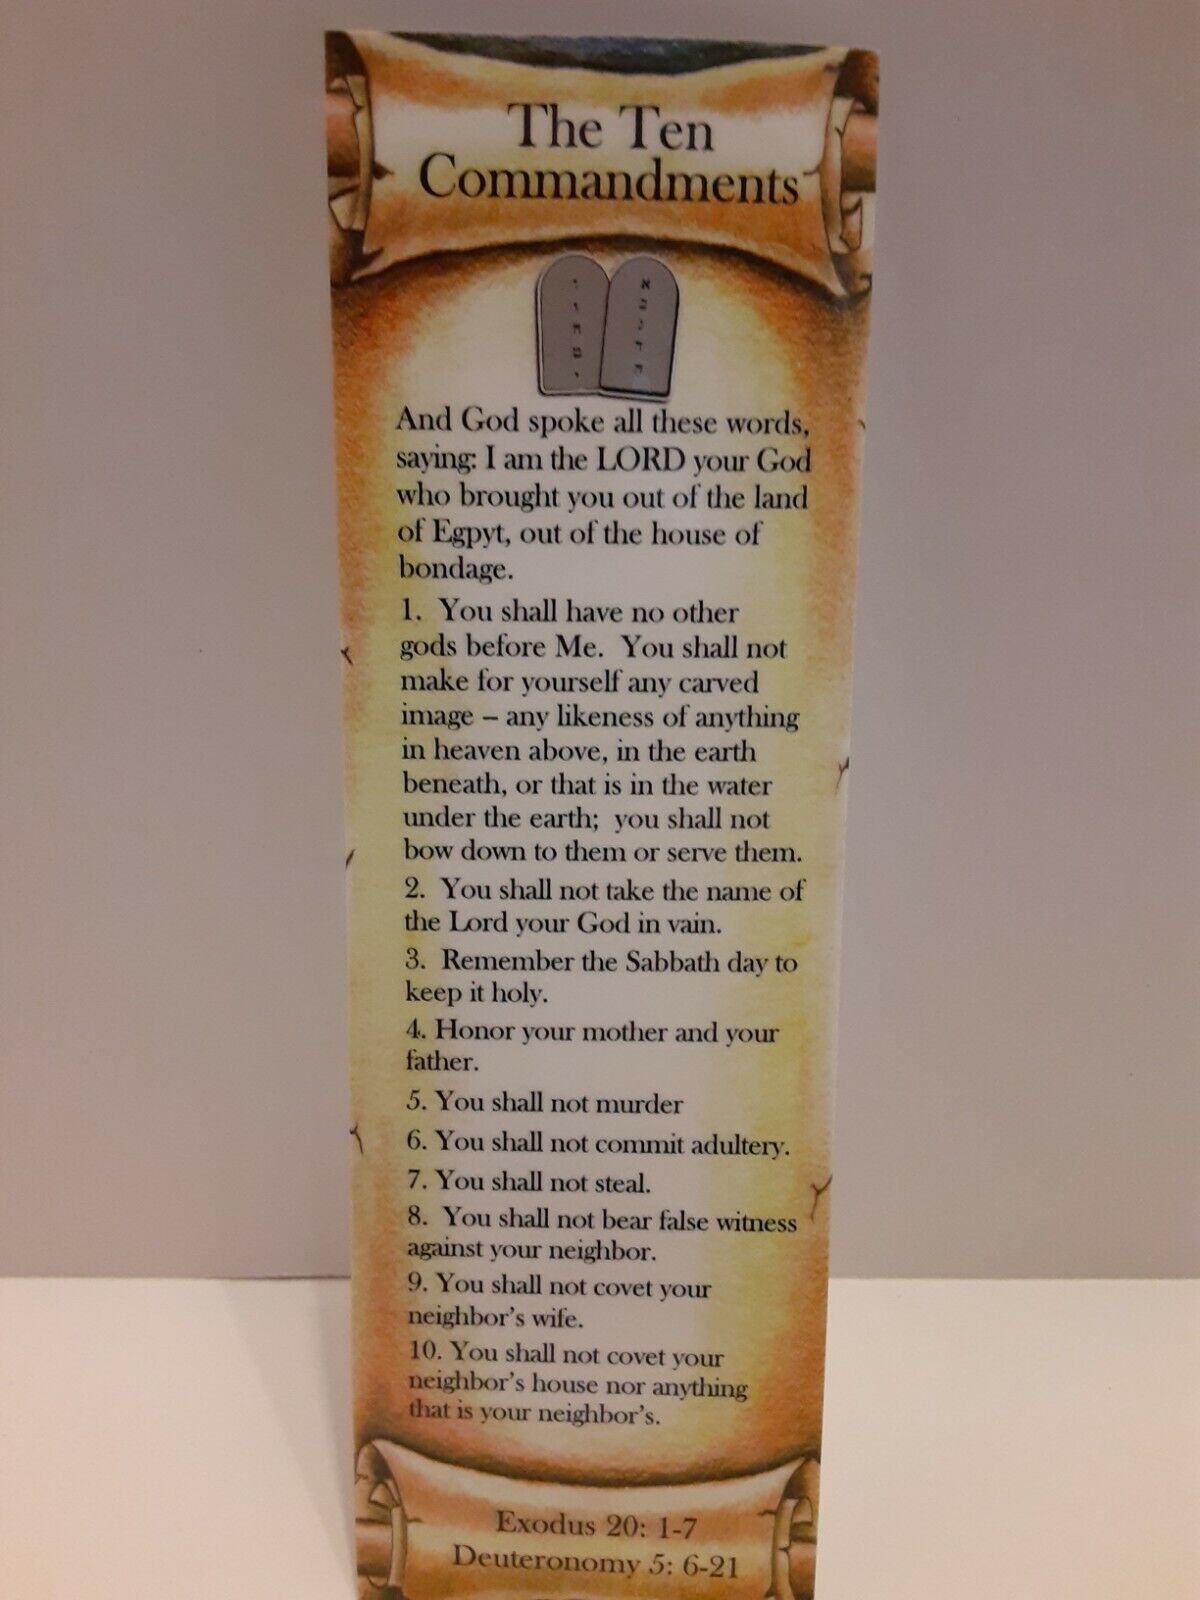 The Ten Commandents Book Marker Deuteronomy 5:28-29